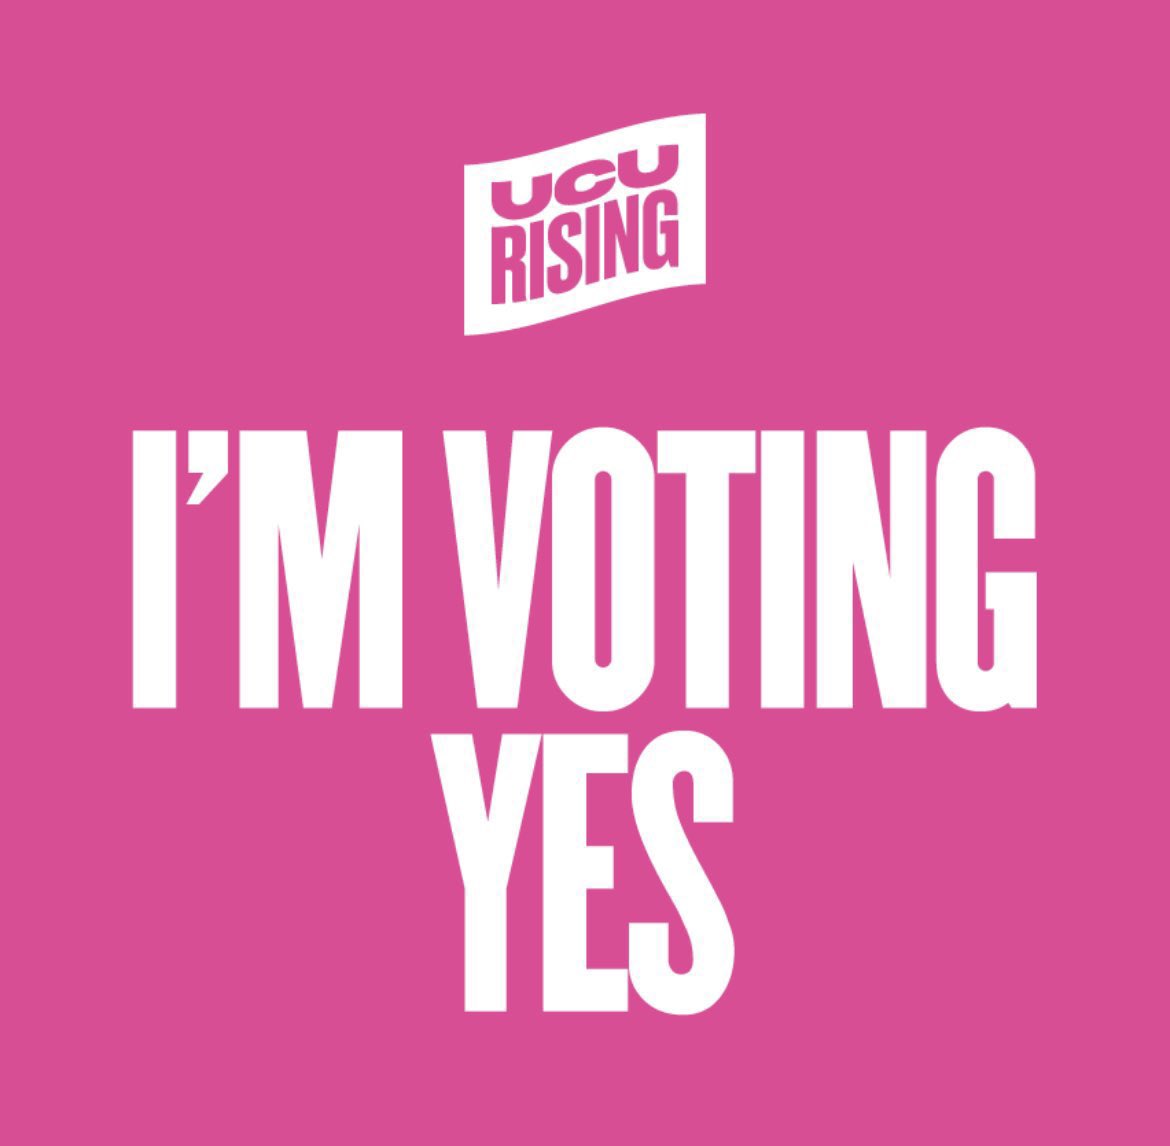 I’ve voted - it’s a YES x4 from me! We have to keep up the pressure - @sussexucu @DrJoGrady @ucu #ucuRISING #ussmess